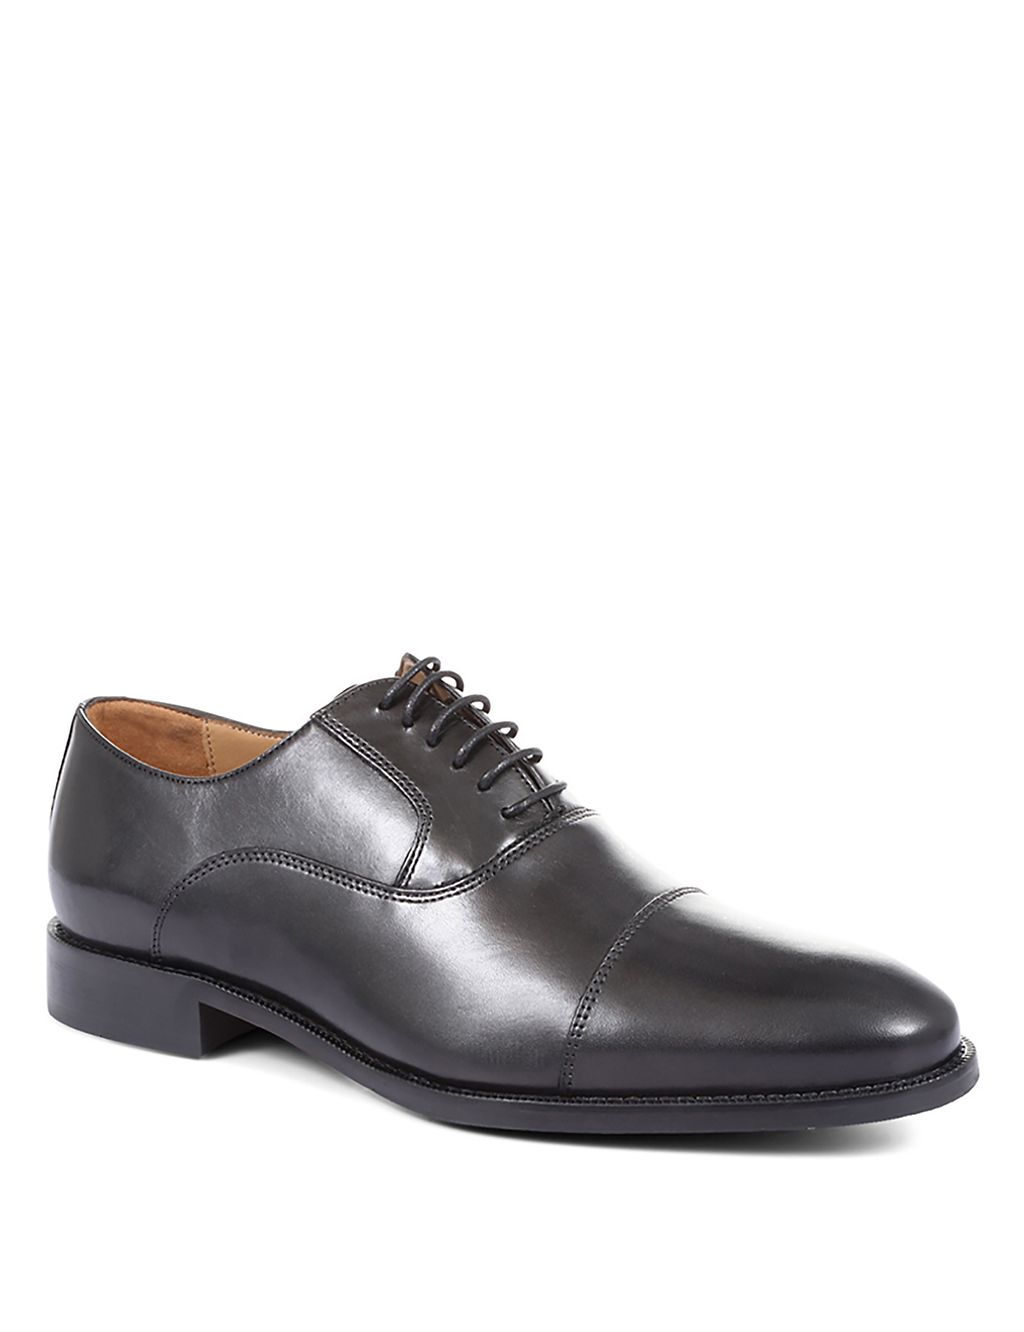 Leather Oxford Shoes | Jones Bootmaker | M&S